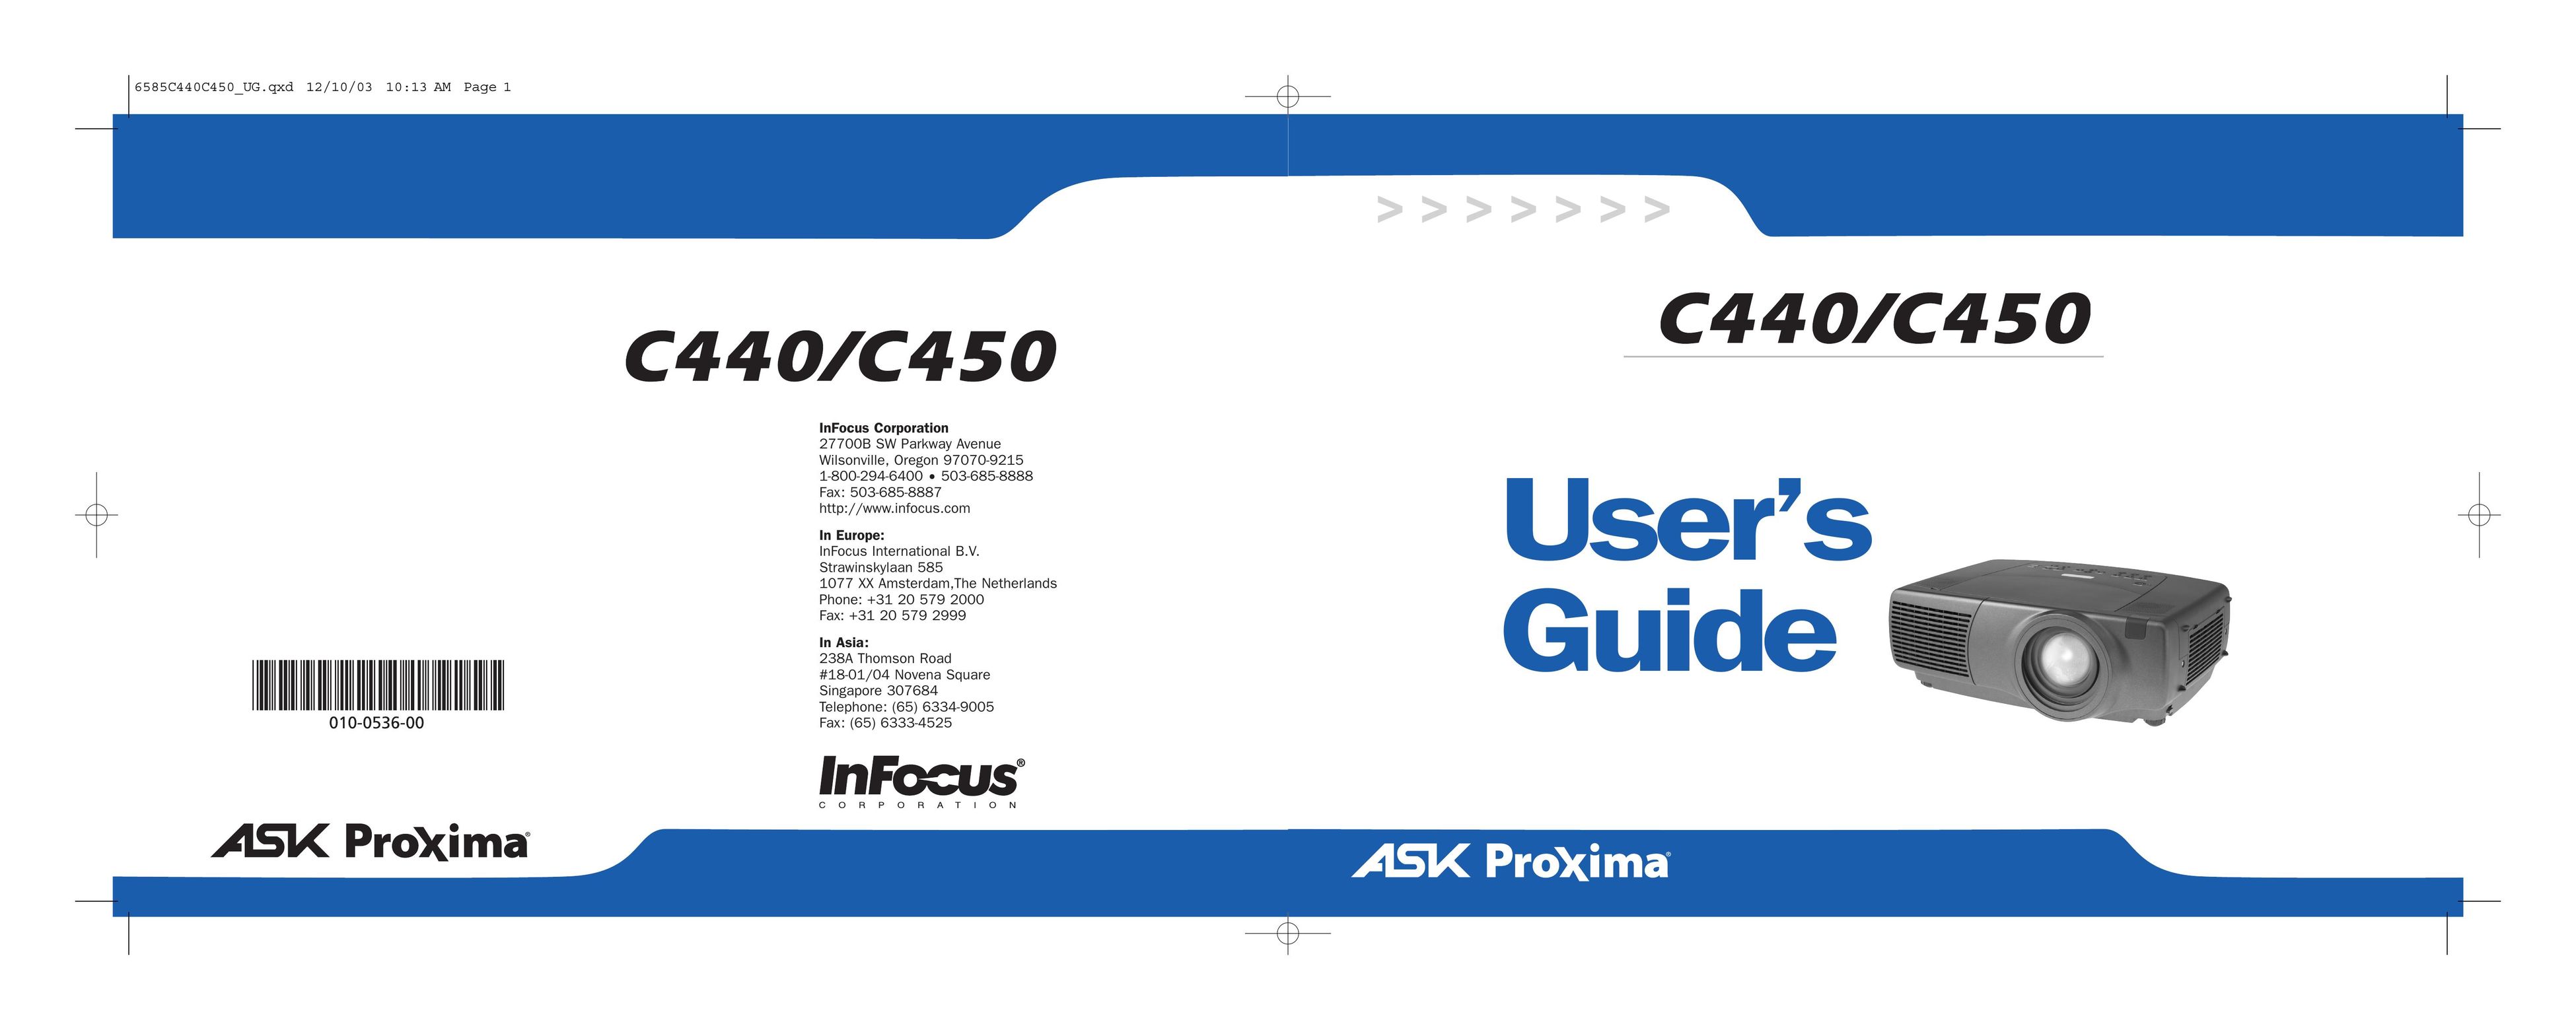 Ask Proxima C440 Projector User Manual